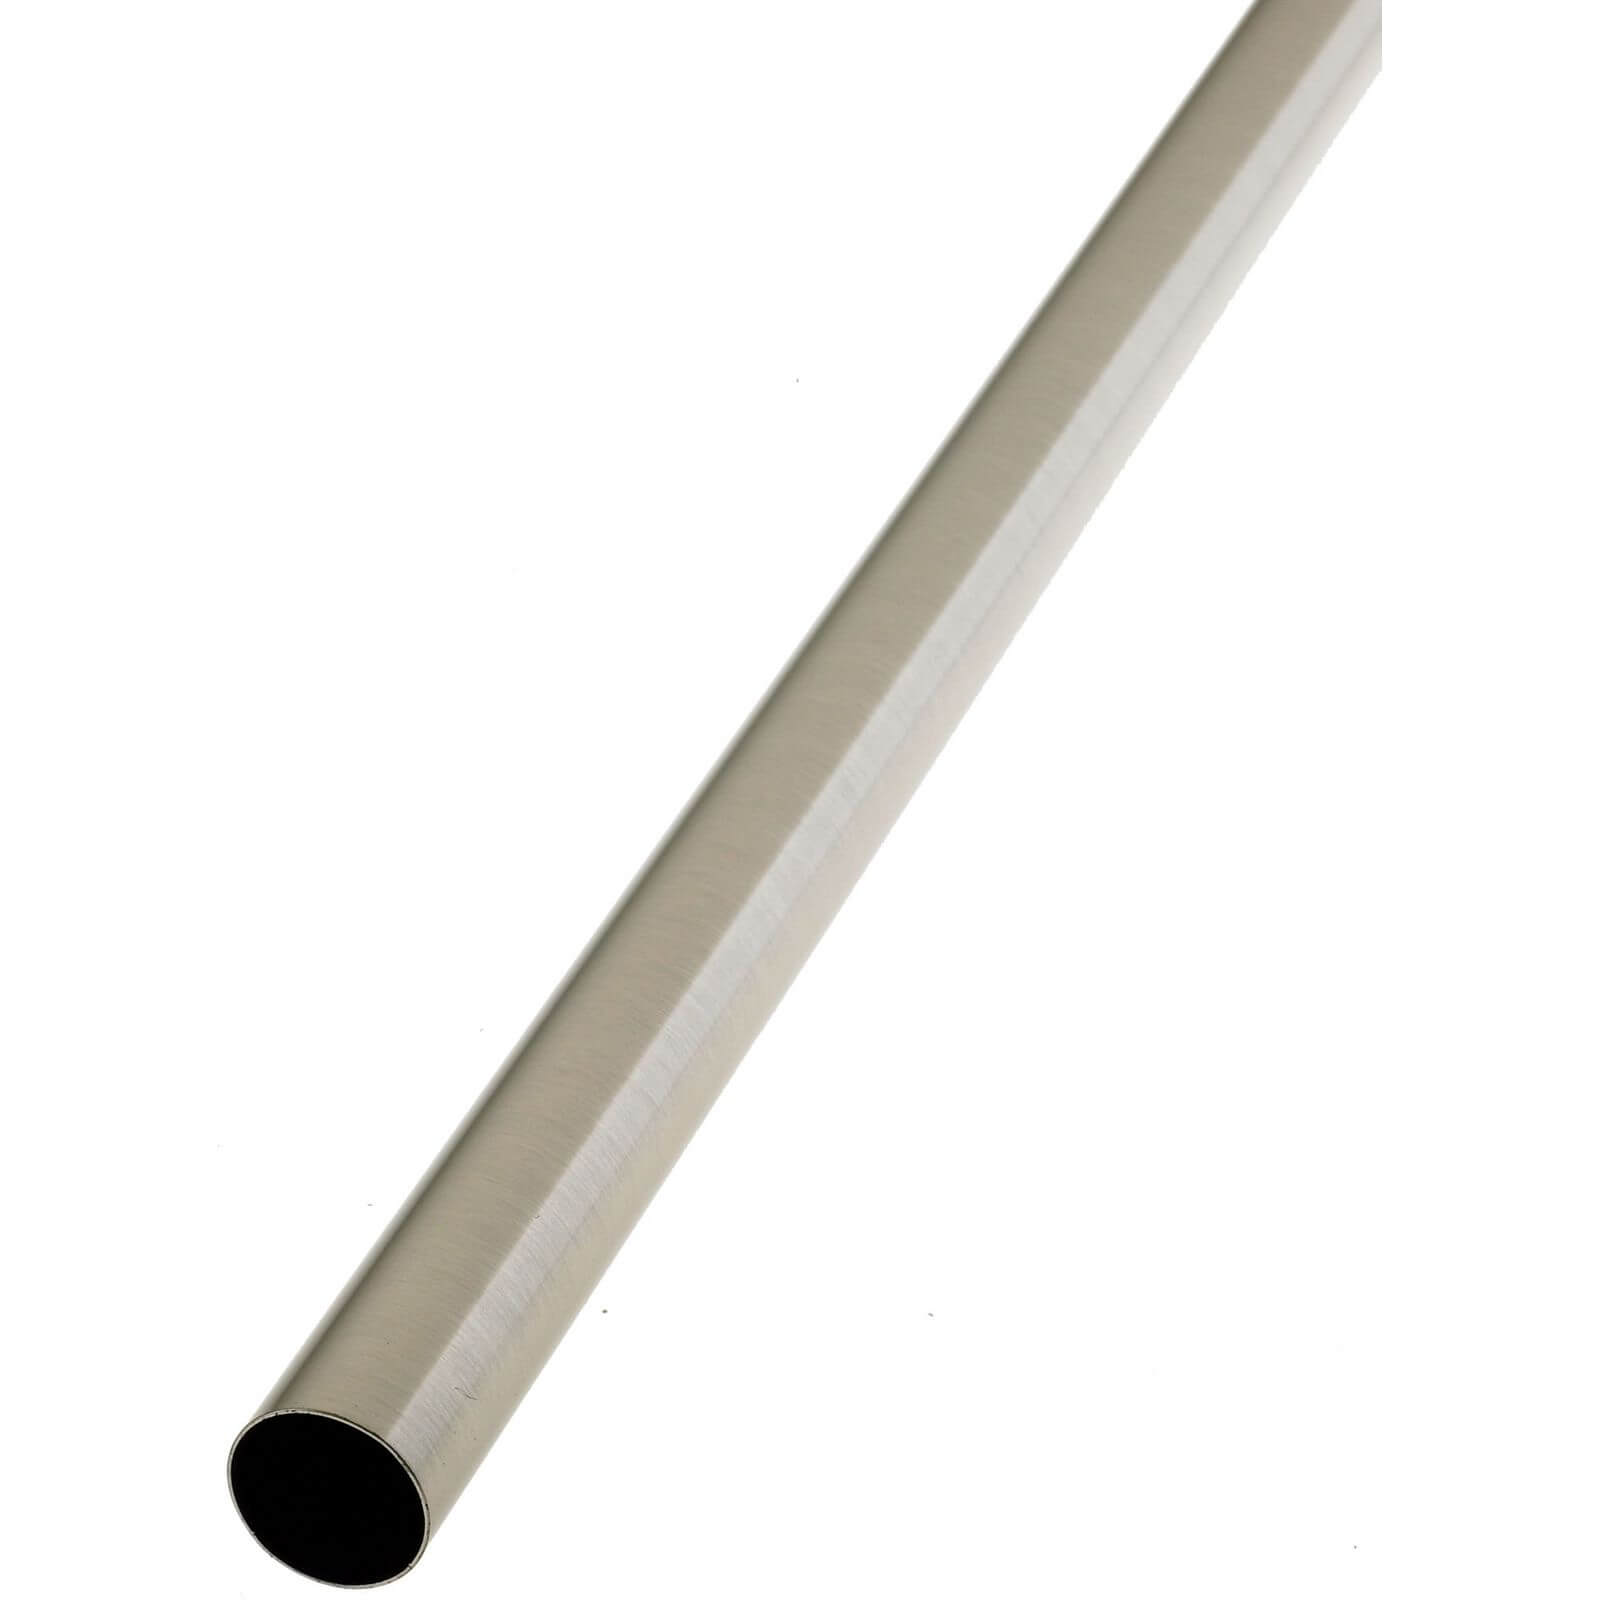 Rothley Steel Tube - Brushed Nickel - 25mm x 0.91m